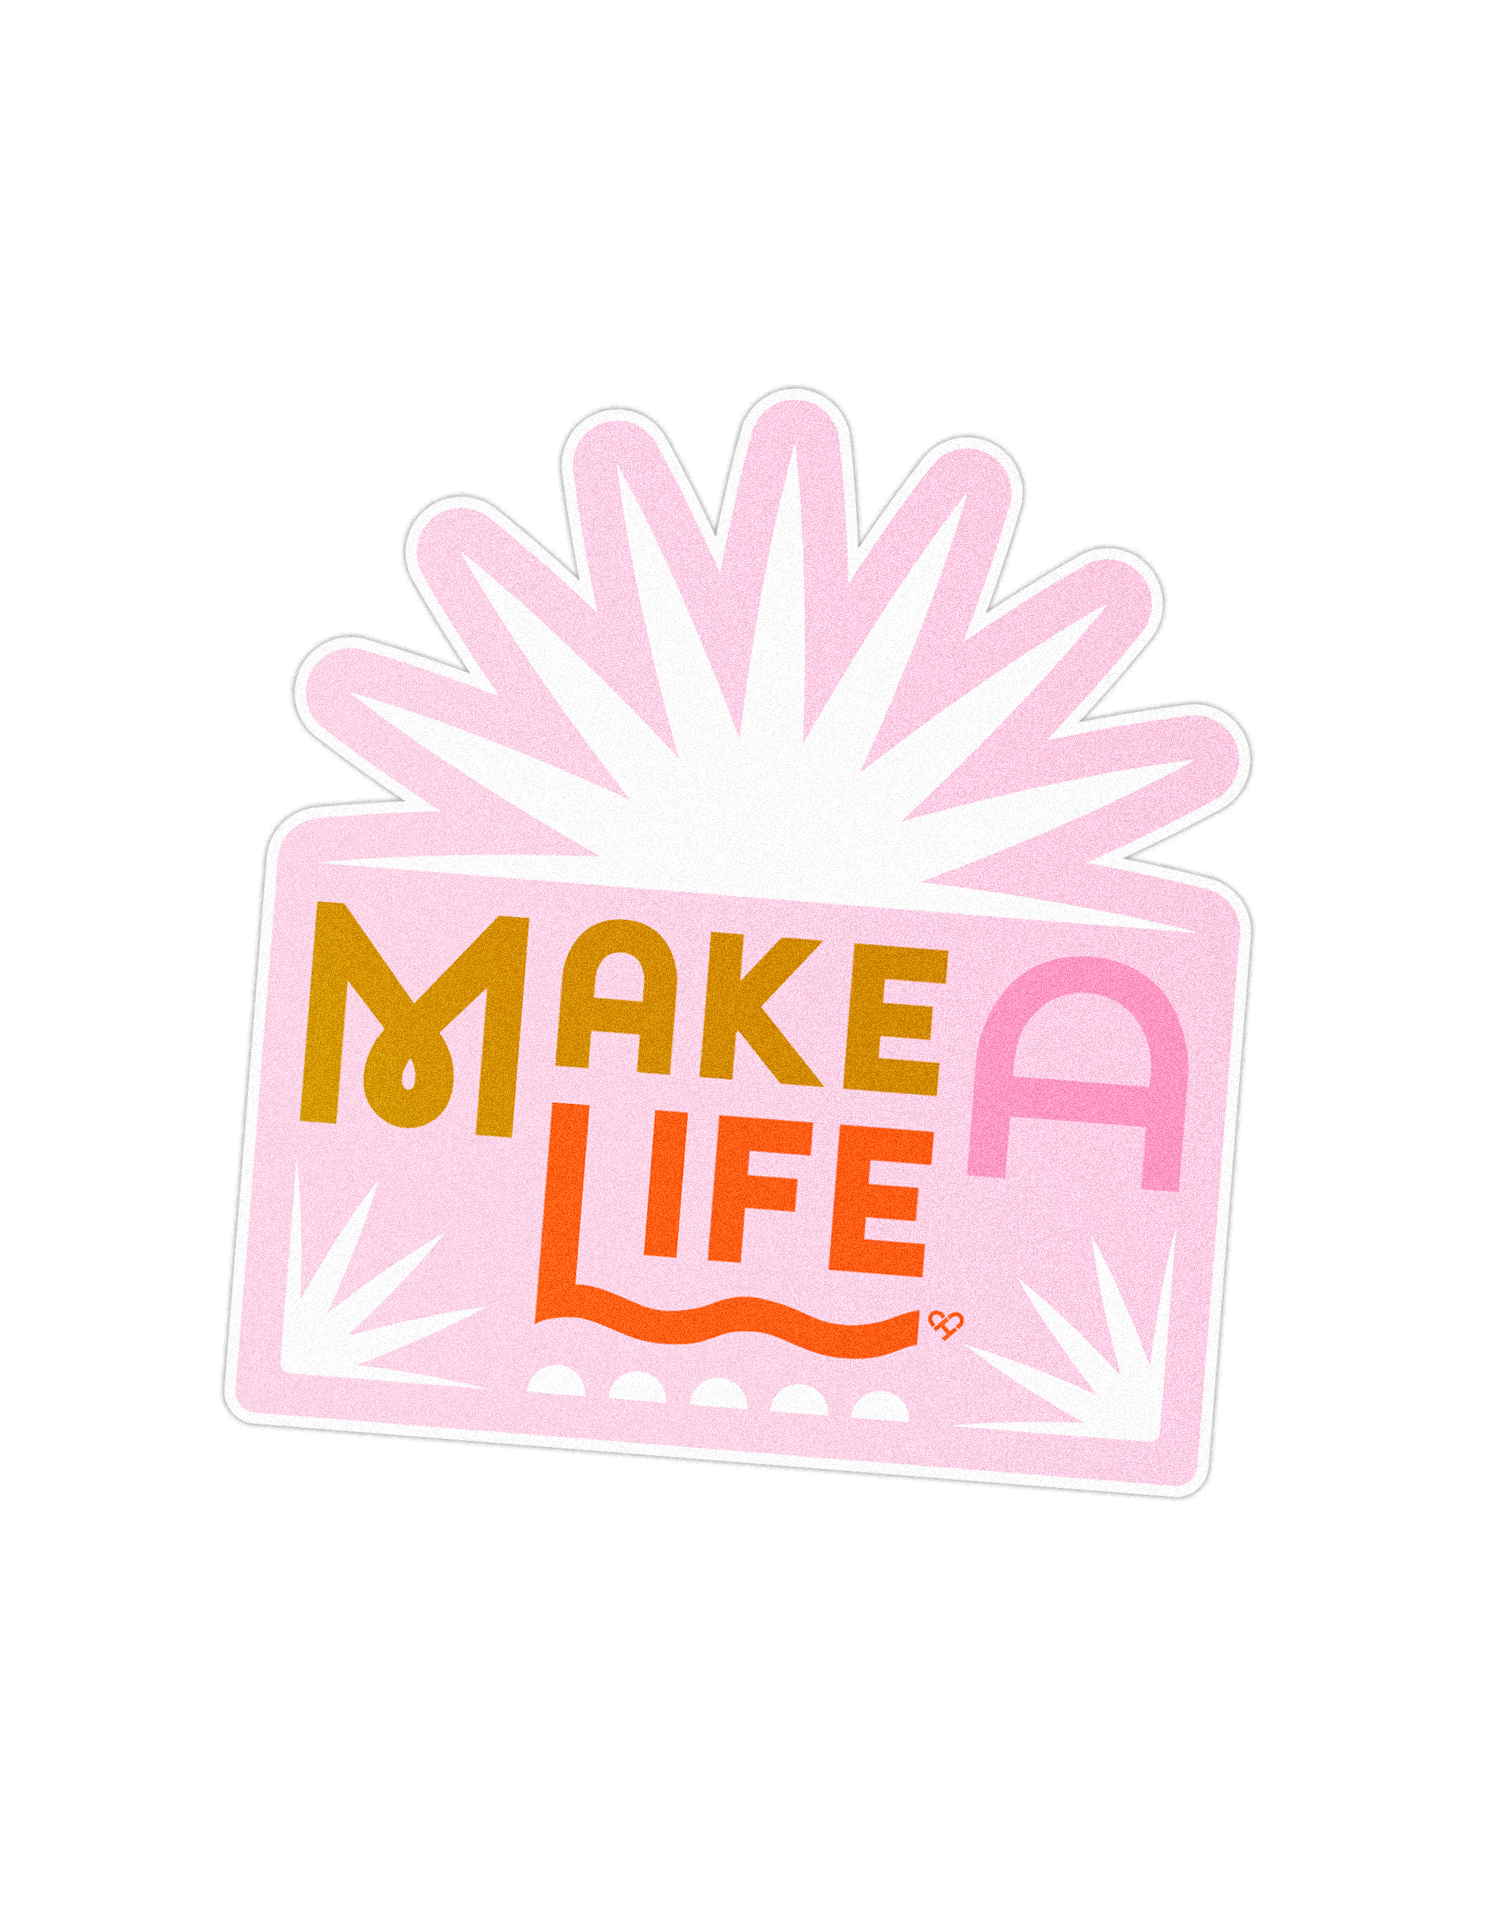 Make-A-Life.png